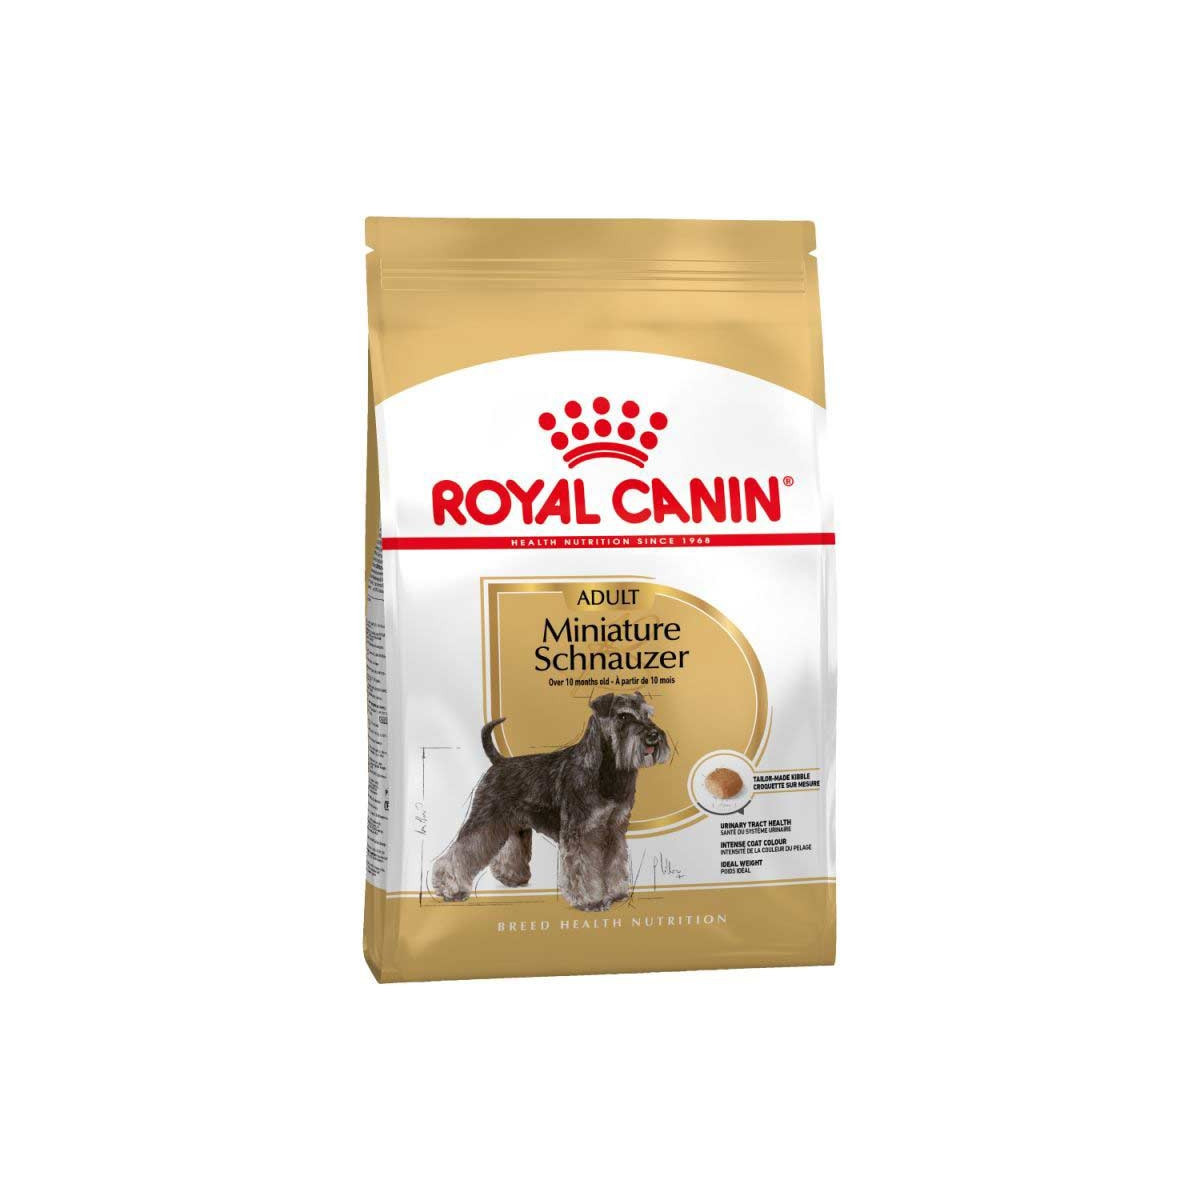 Royal Canin Miniature Schnauzer Adult 